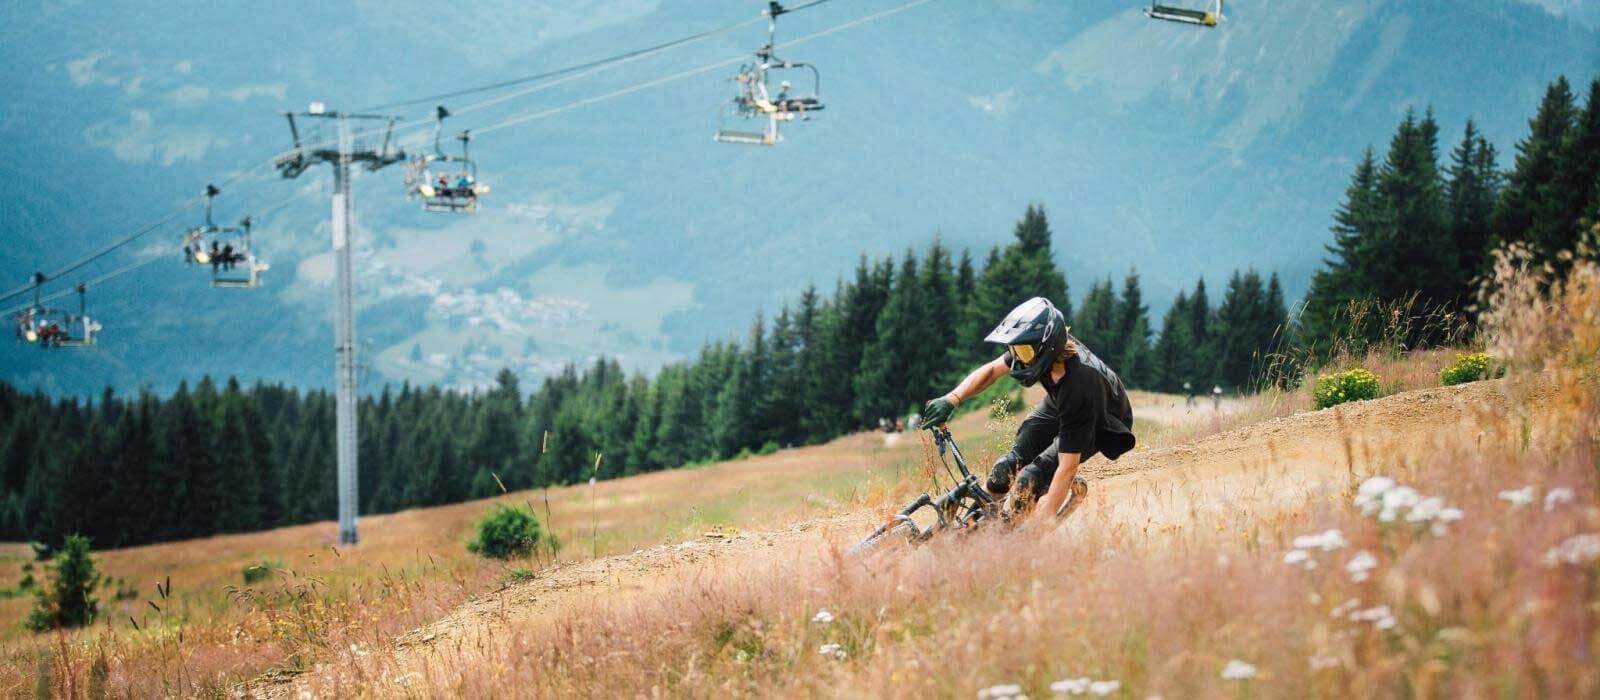 Mountain Biking in France